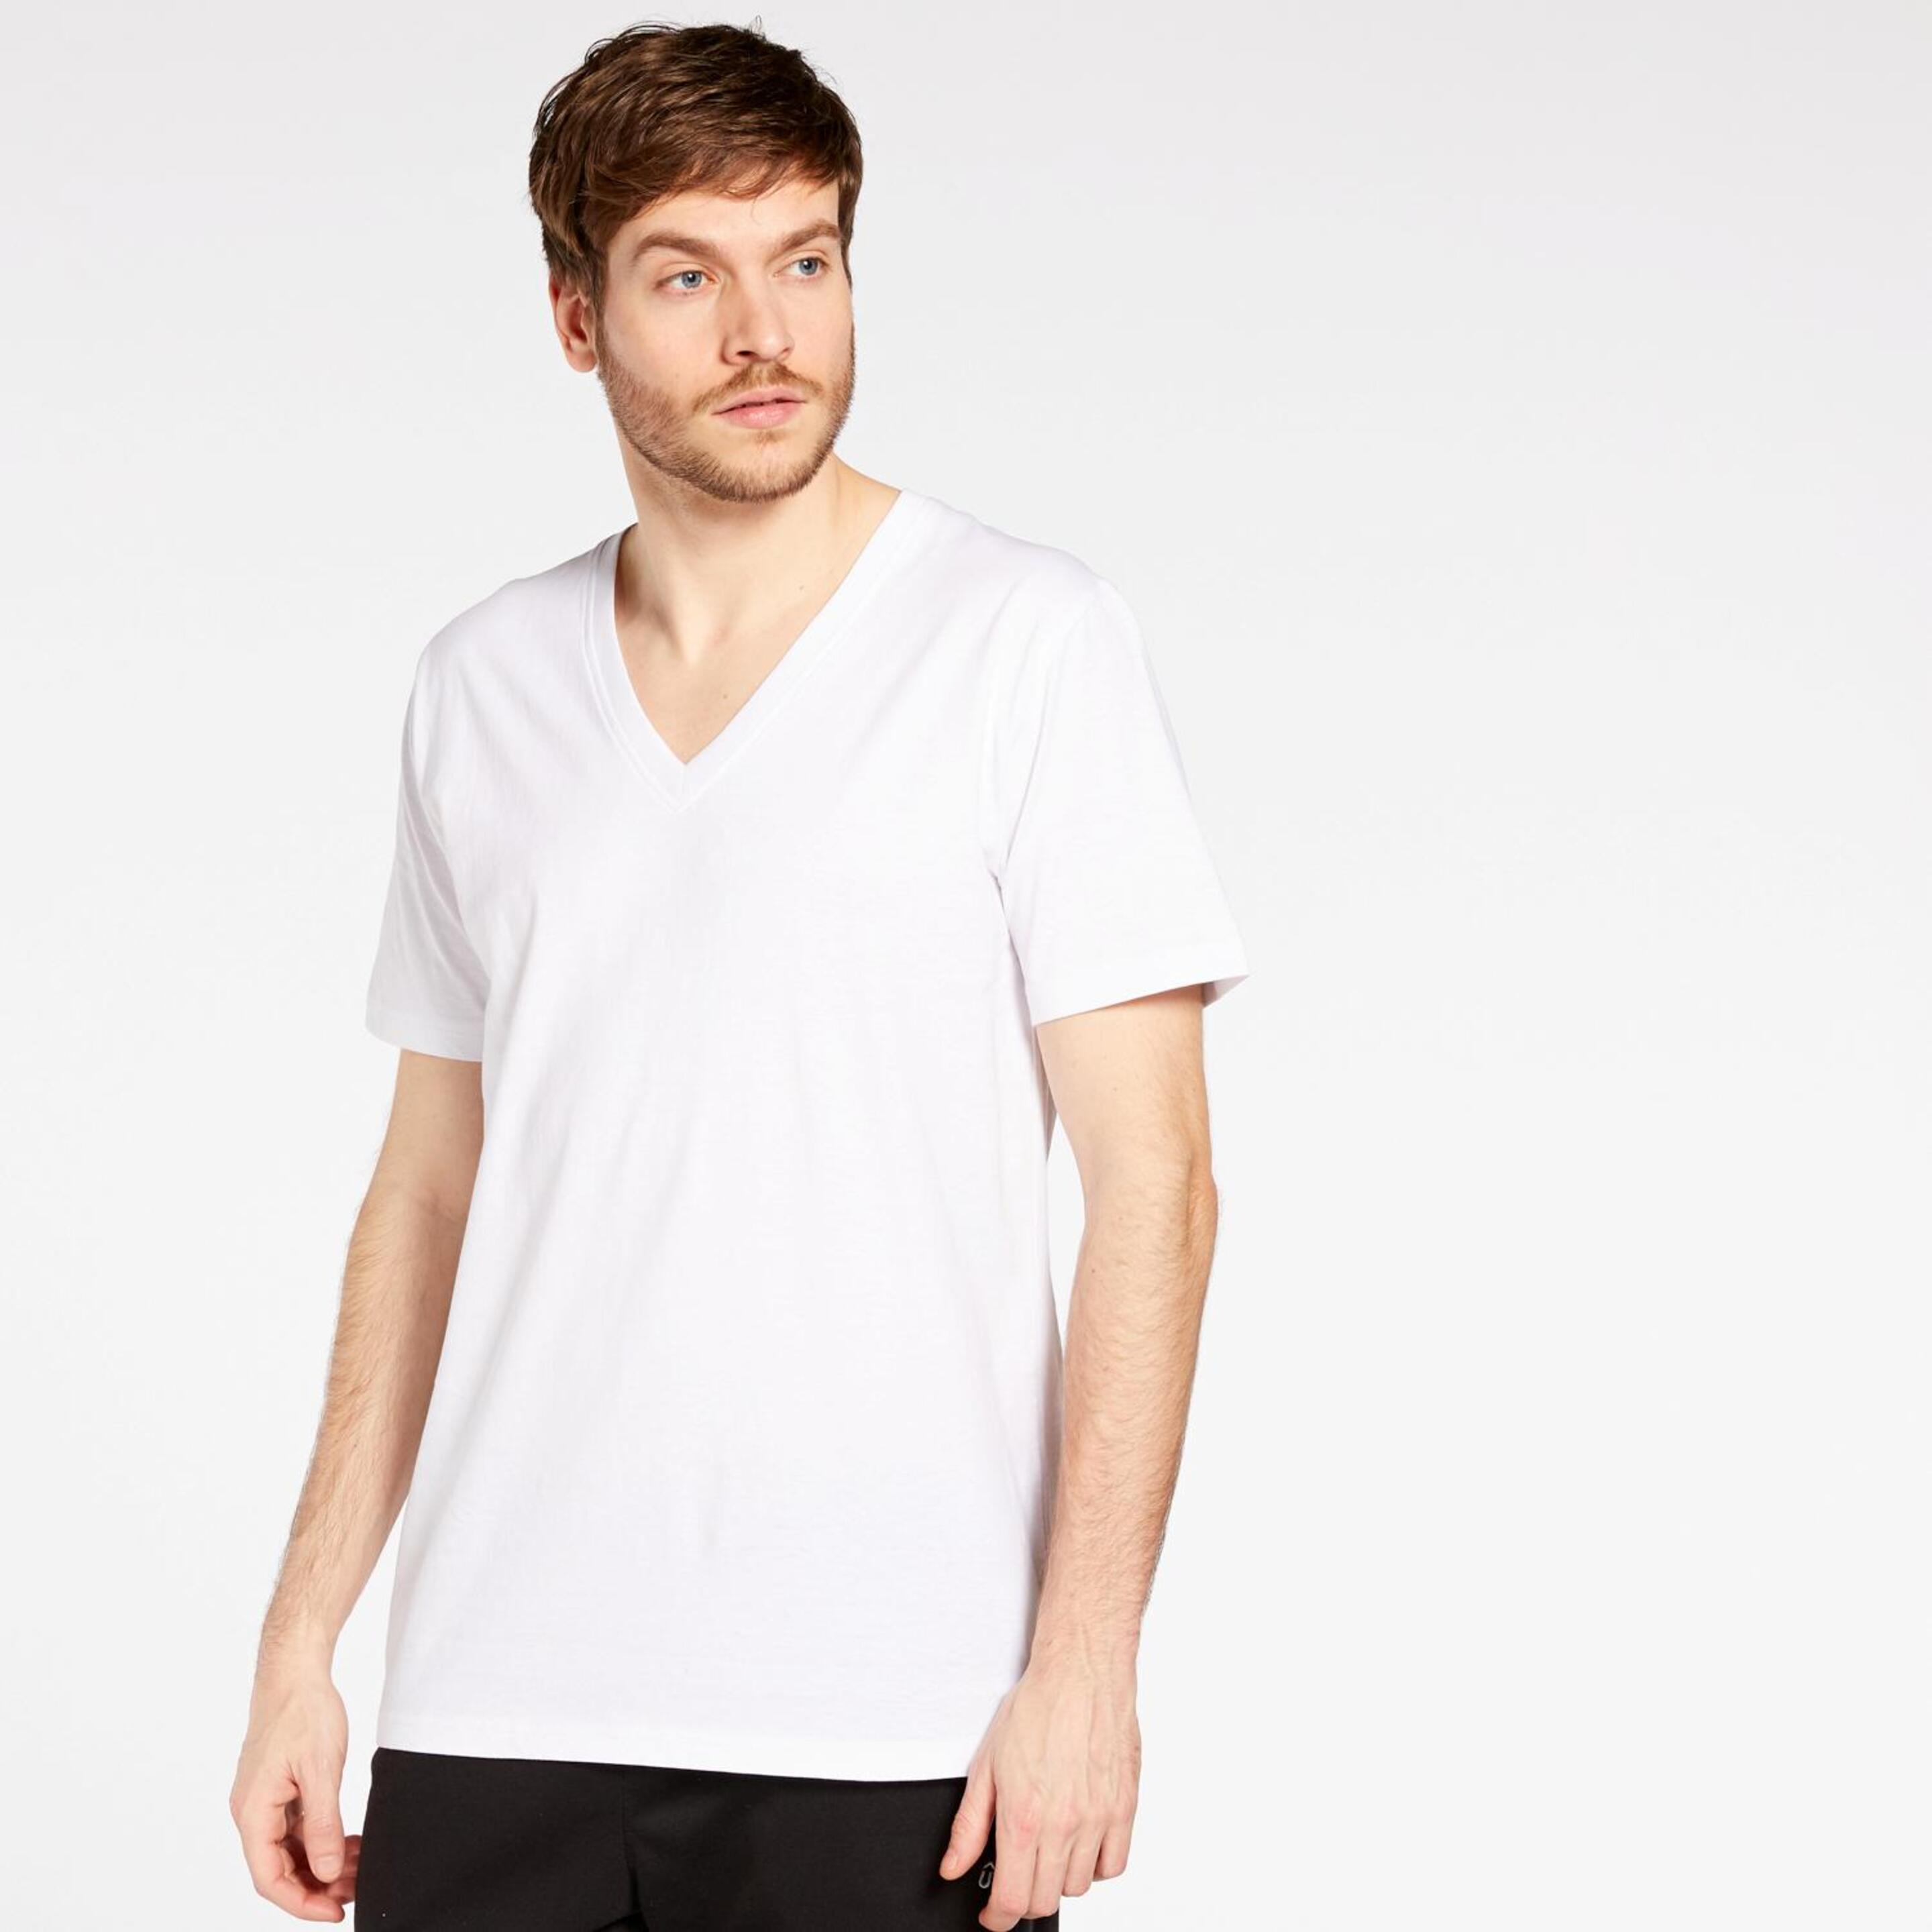 Up Basic - blanco - Camiseta Cuello Pico Hombre